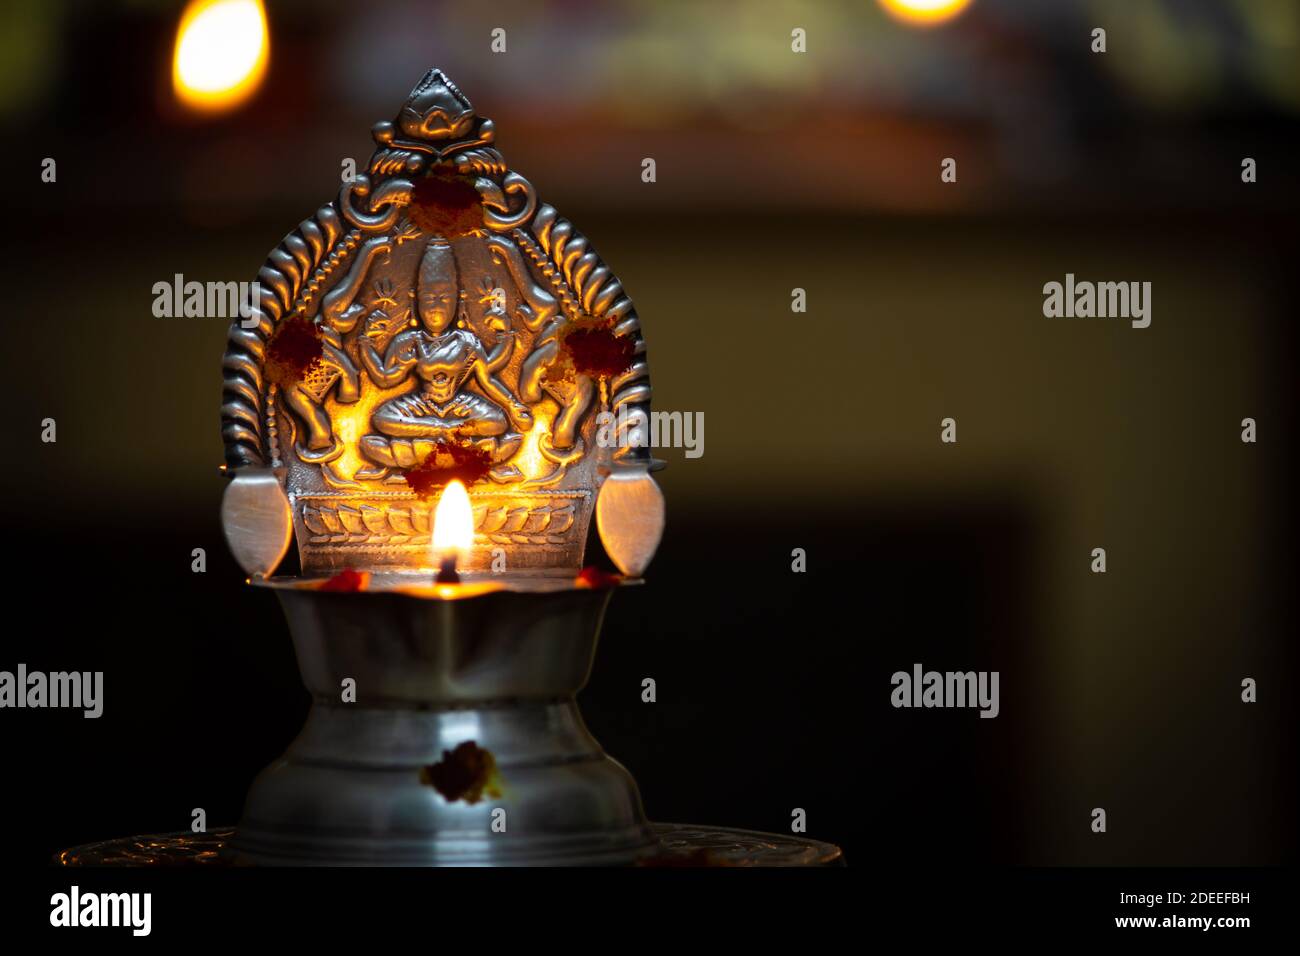 Nahansicht der beleuchteten Diya-Lampe. Lampe aus silbernem Metall beleuchtet während des Festivals. Stockfoto